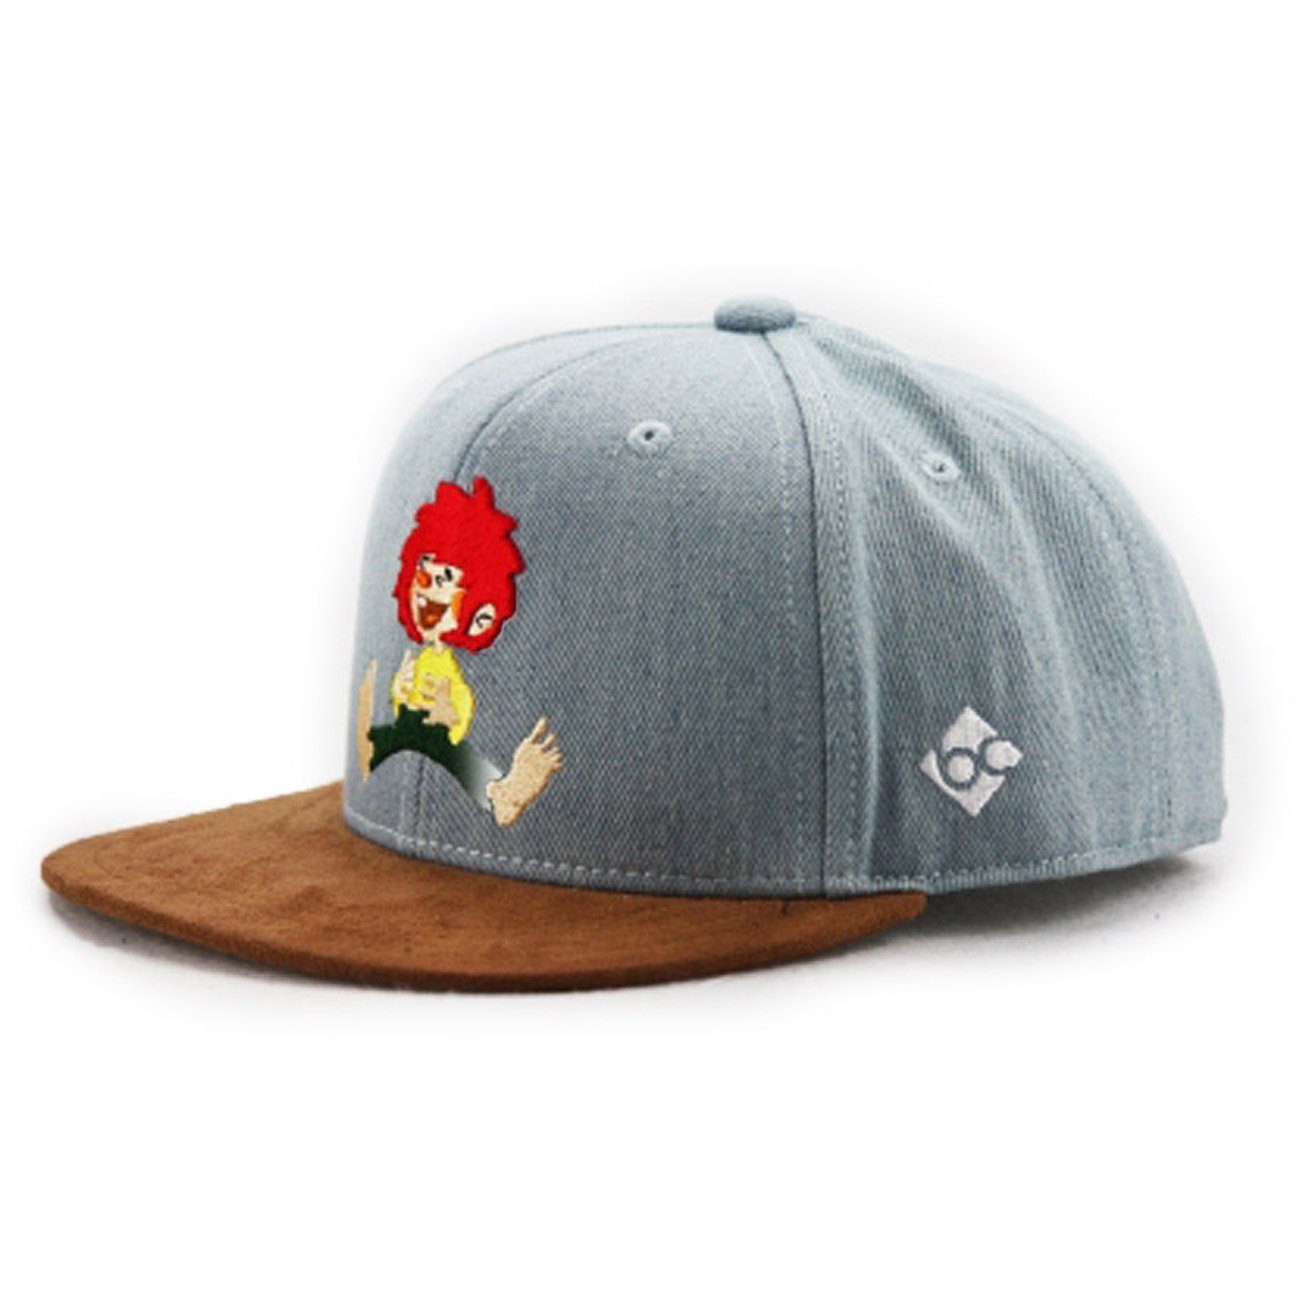 Pumuckl Bavarian Cap Caps Baseball